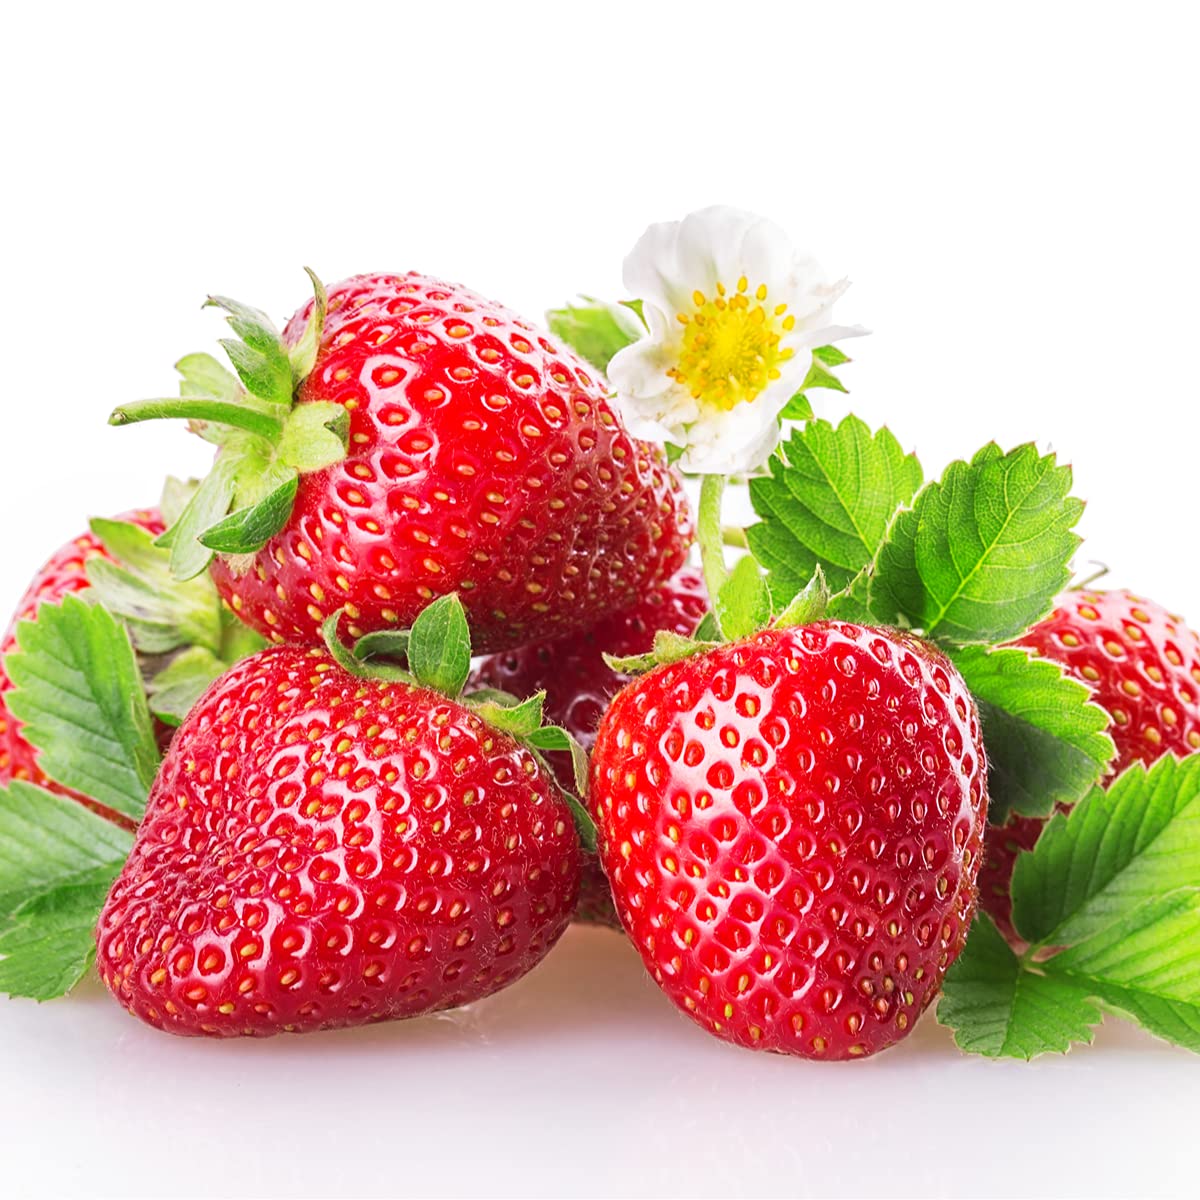 Strawberry Plants - 'Sweetheart' - 5 x Full Plants in 9cm Pots - AcquaGarden